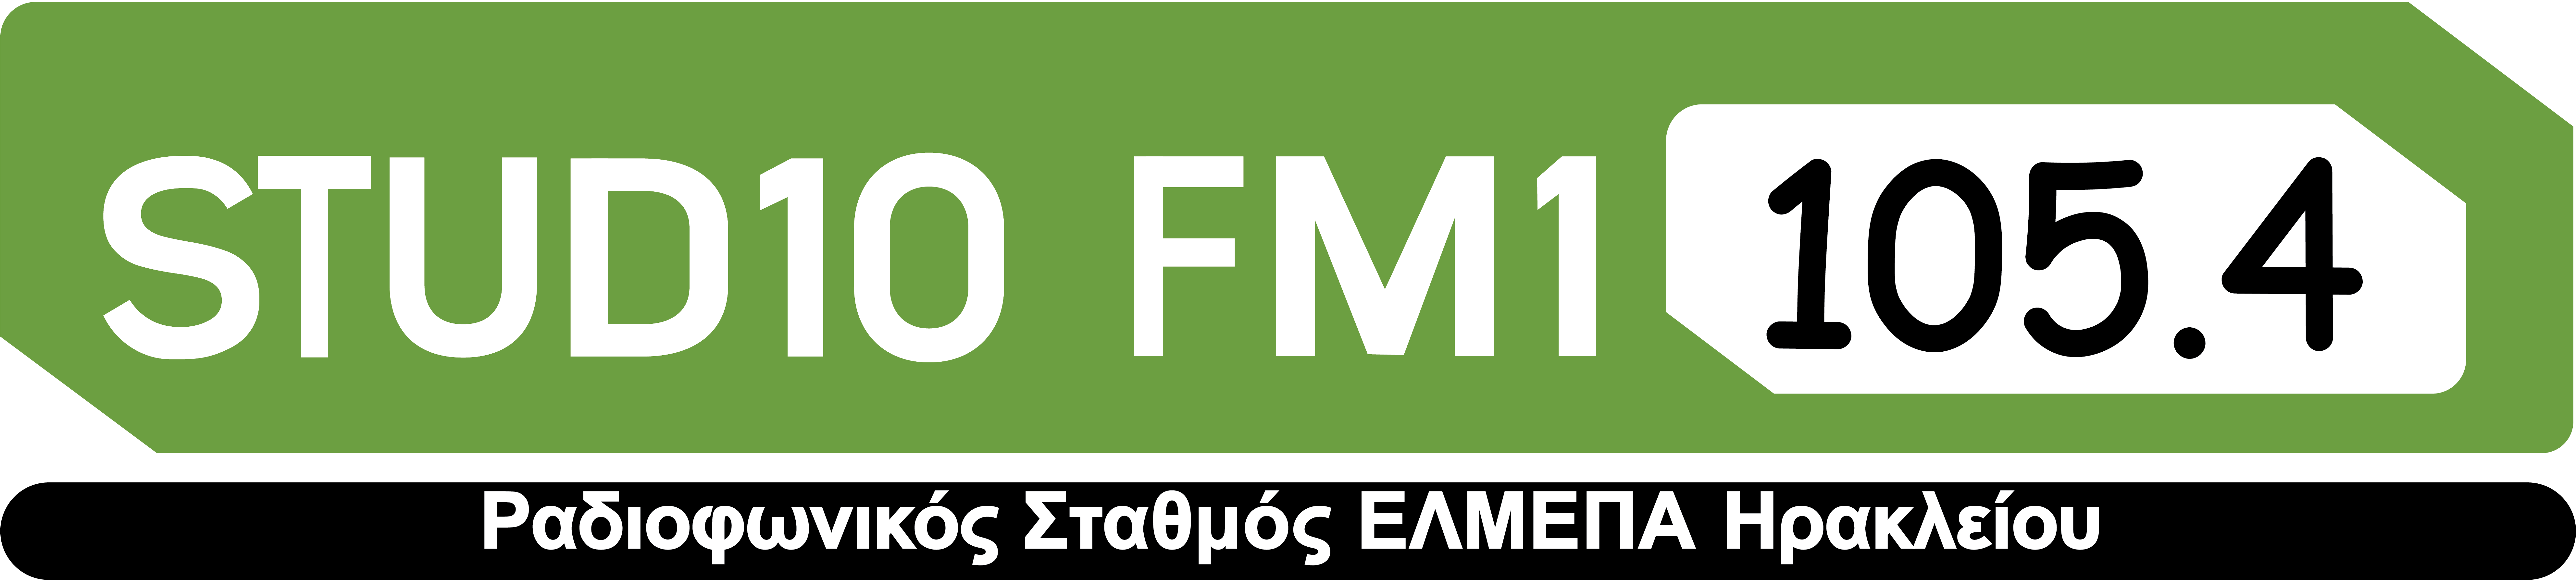 Studio FM1 105.4